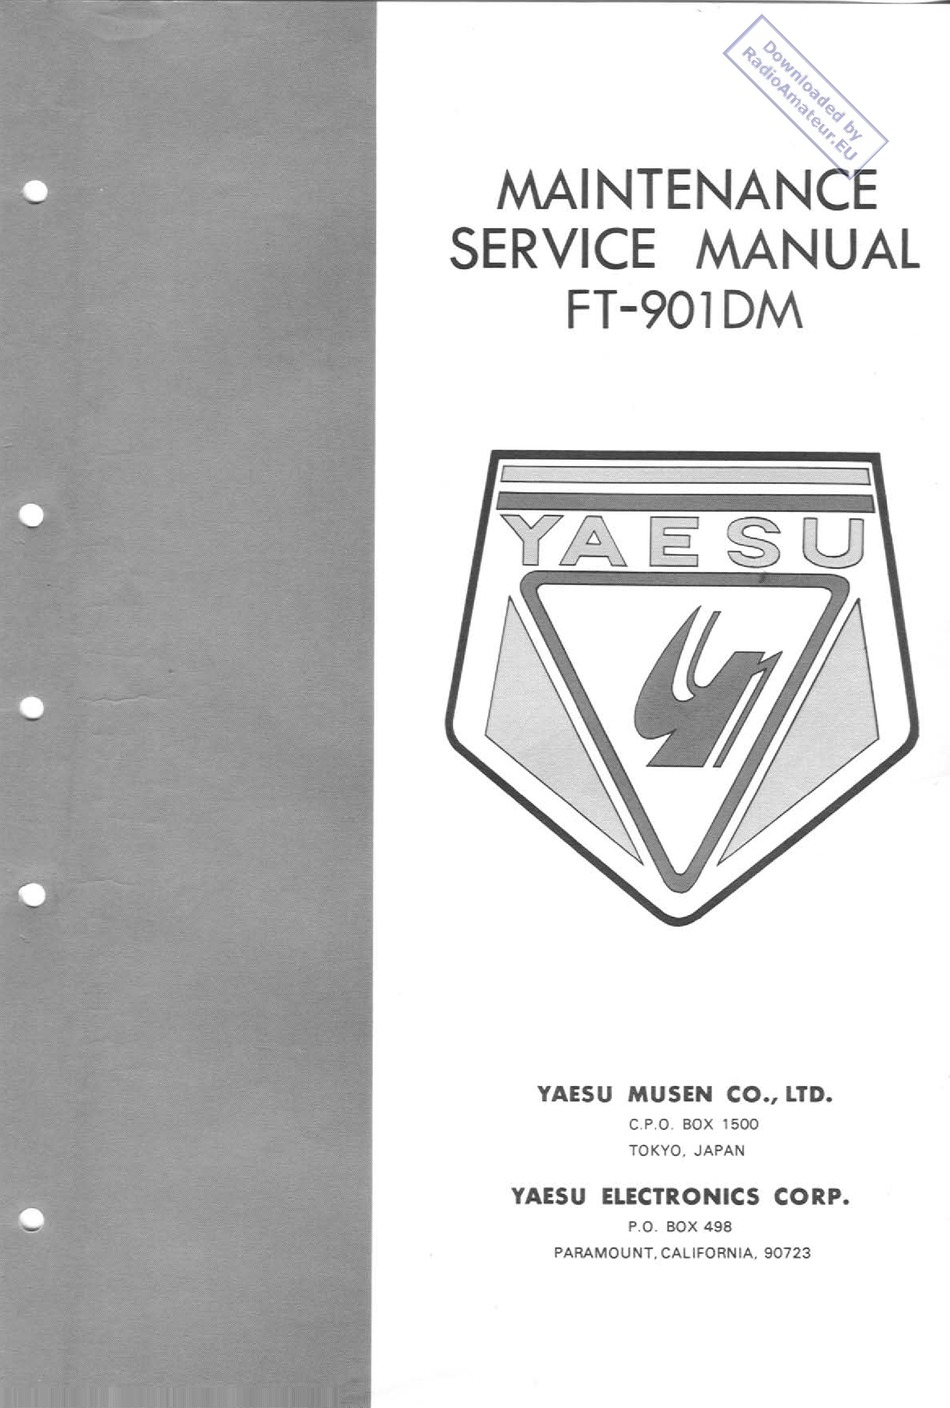 YAESU FT-901DM MAINTENANCE SERVICE MANUAL Pdf Download | ManualsLib